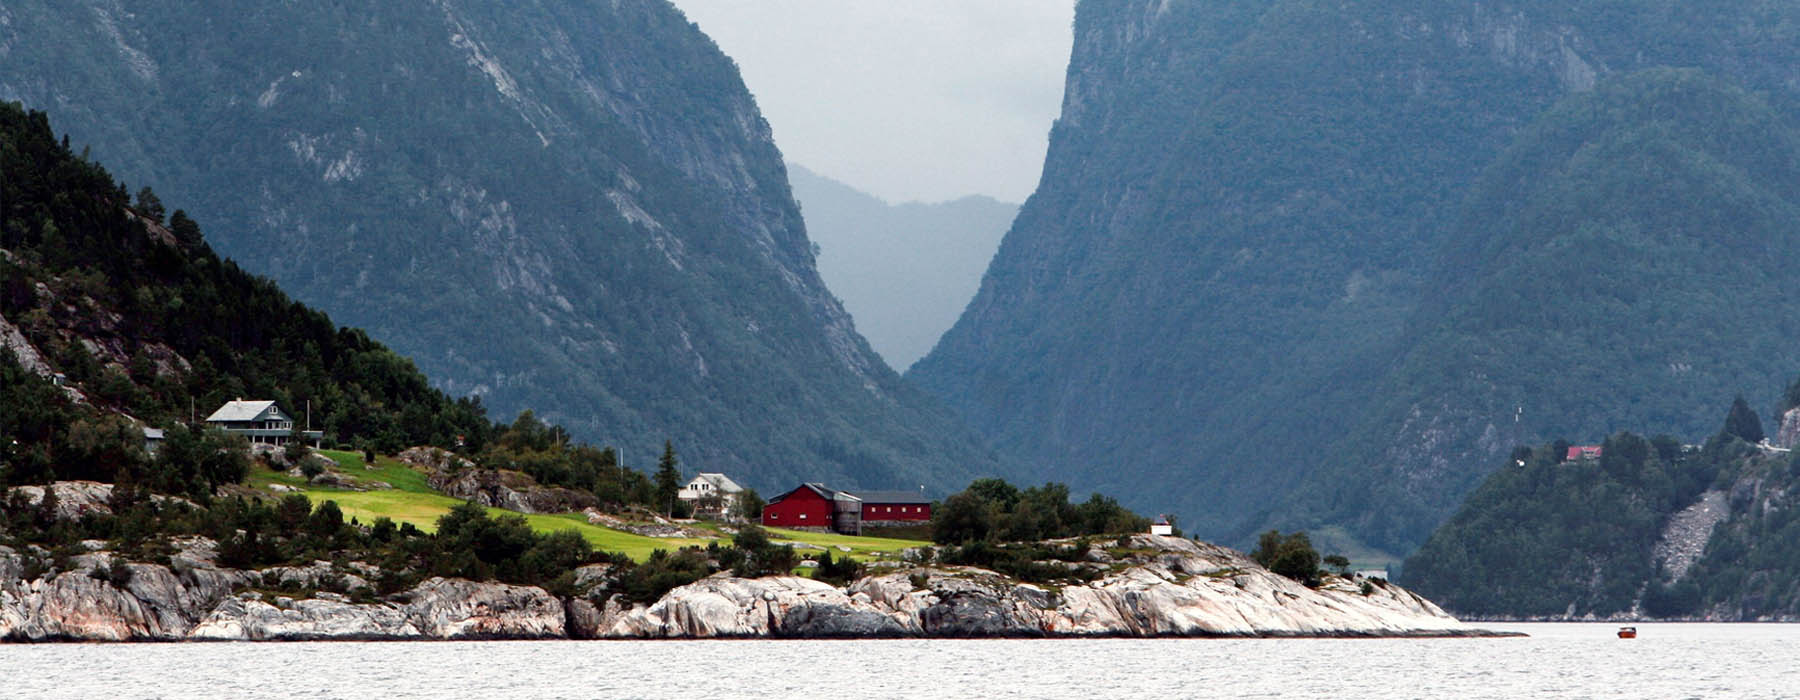 Les itinérants classiques Norvège